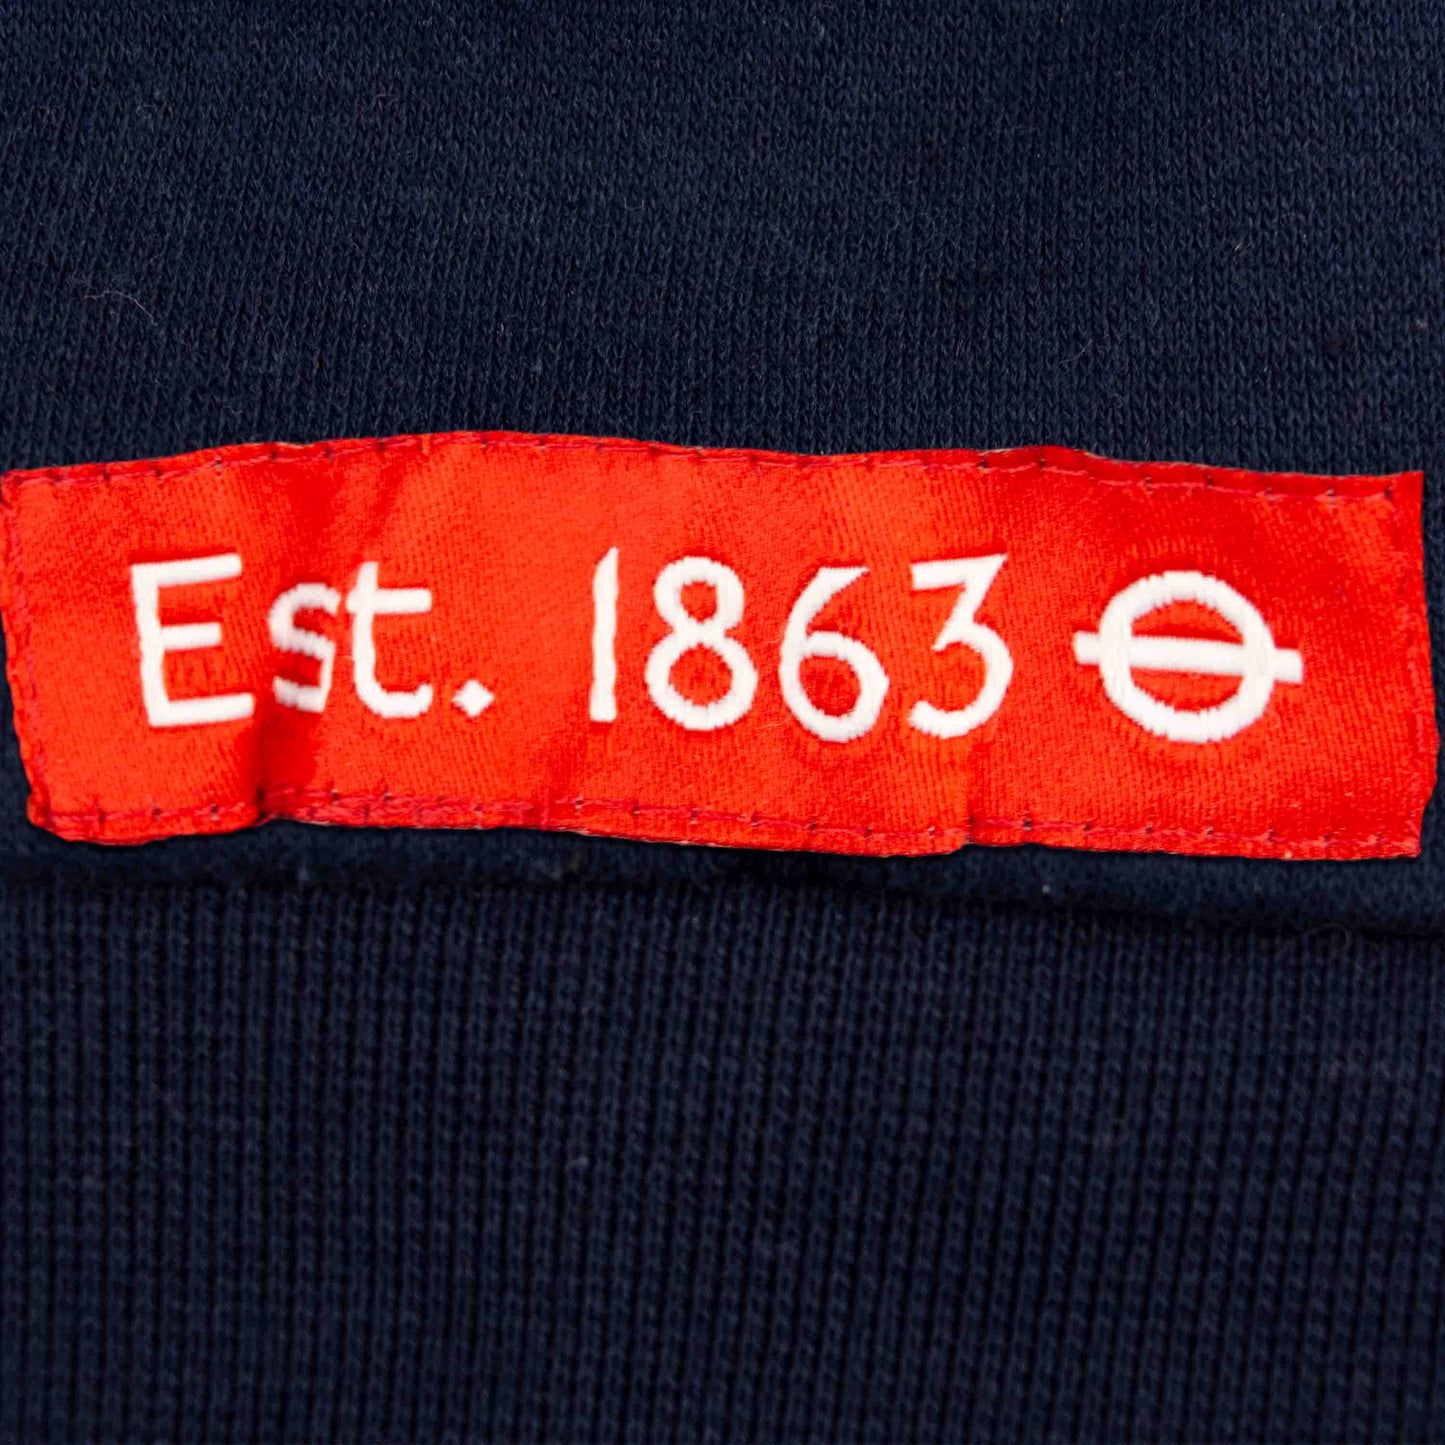 London Underground Navy and Maroon Sweatshirt - Unisex - TFL Merchandise